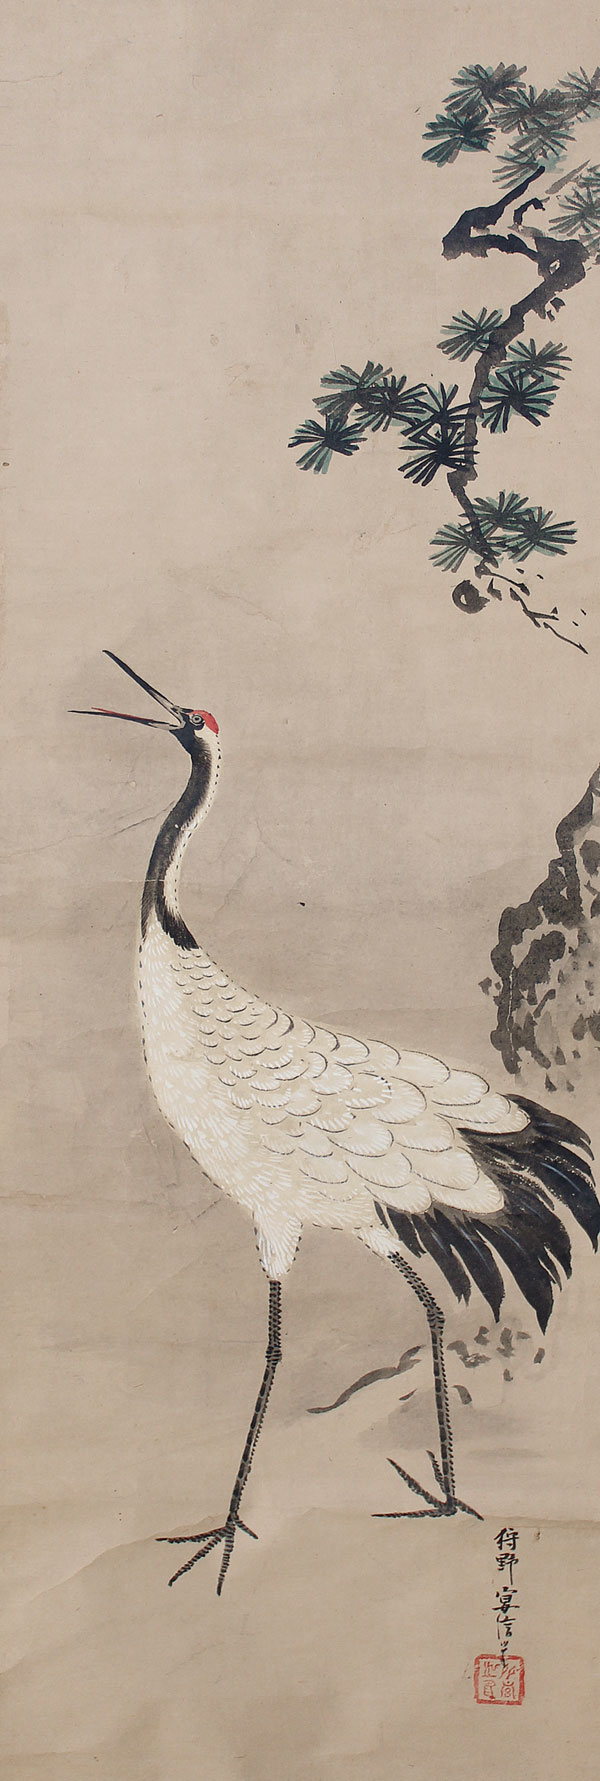 Bildrolle-Japan-Edo-Epoche-2B